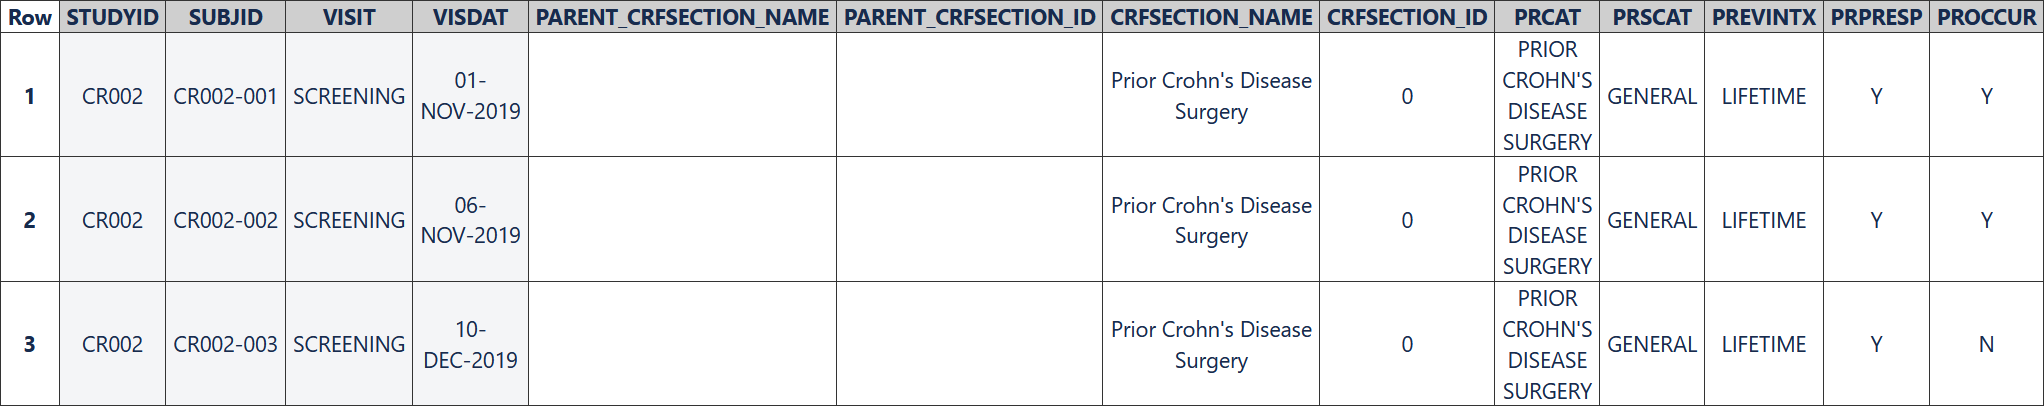 Prior Crohns Disease Surgery